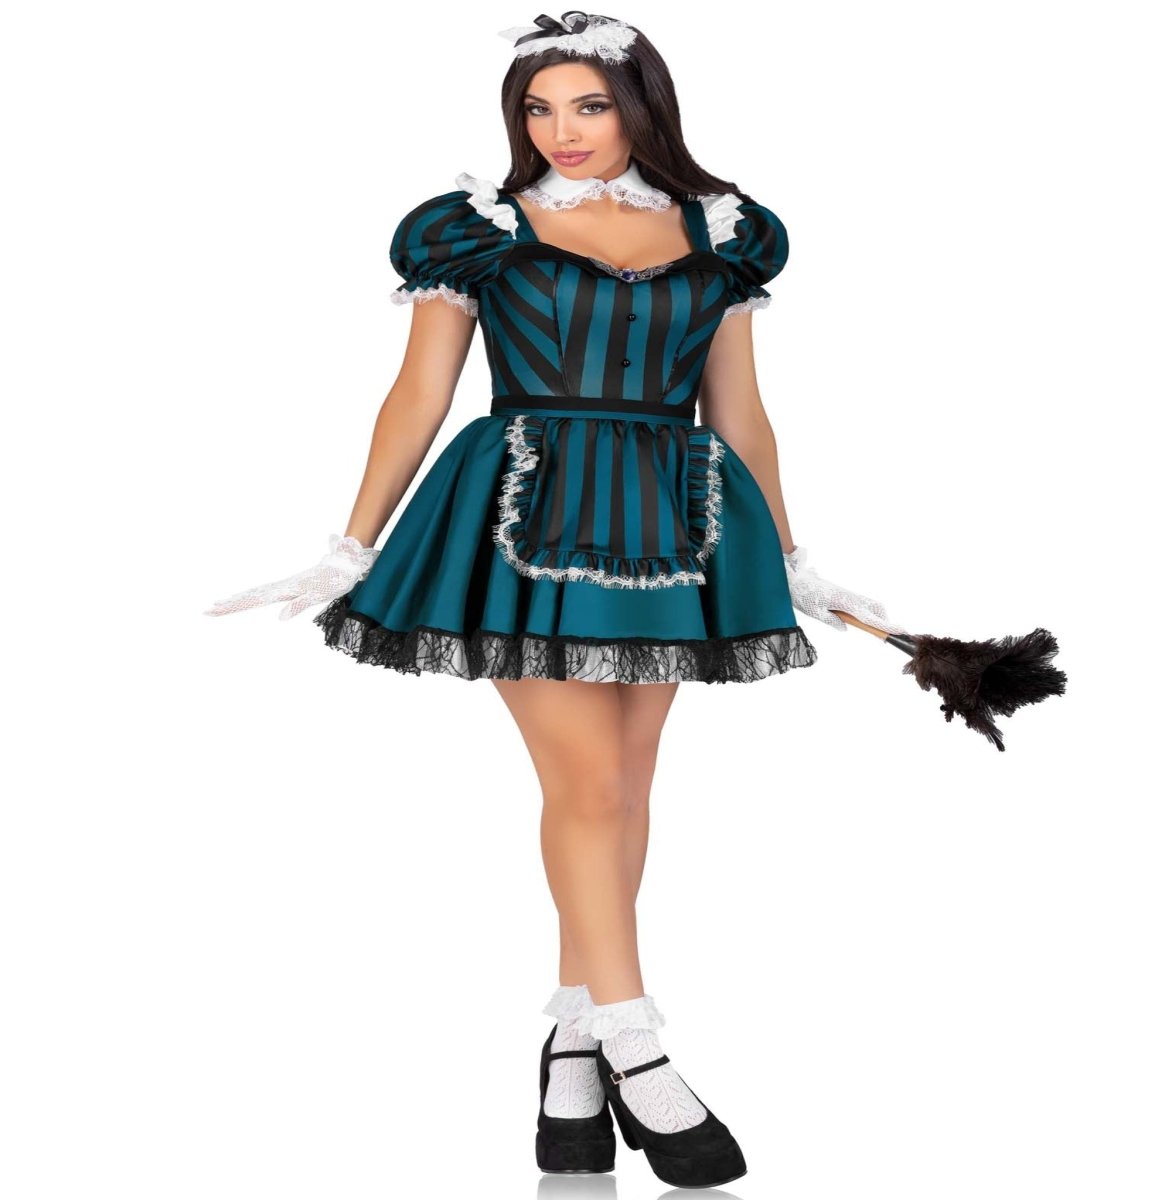 4 PC Victorian Maid Costume - worldclasscostumes